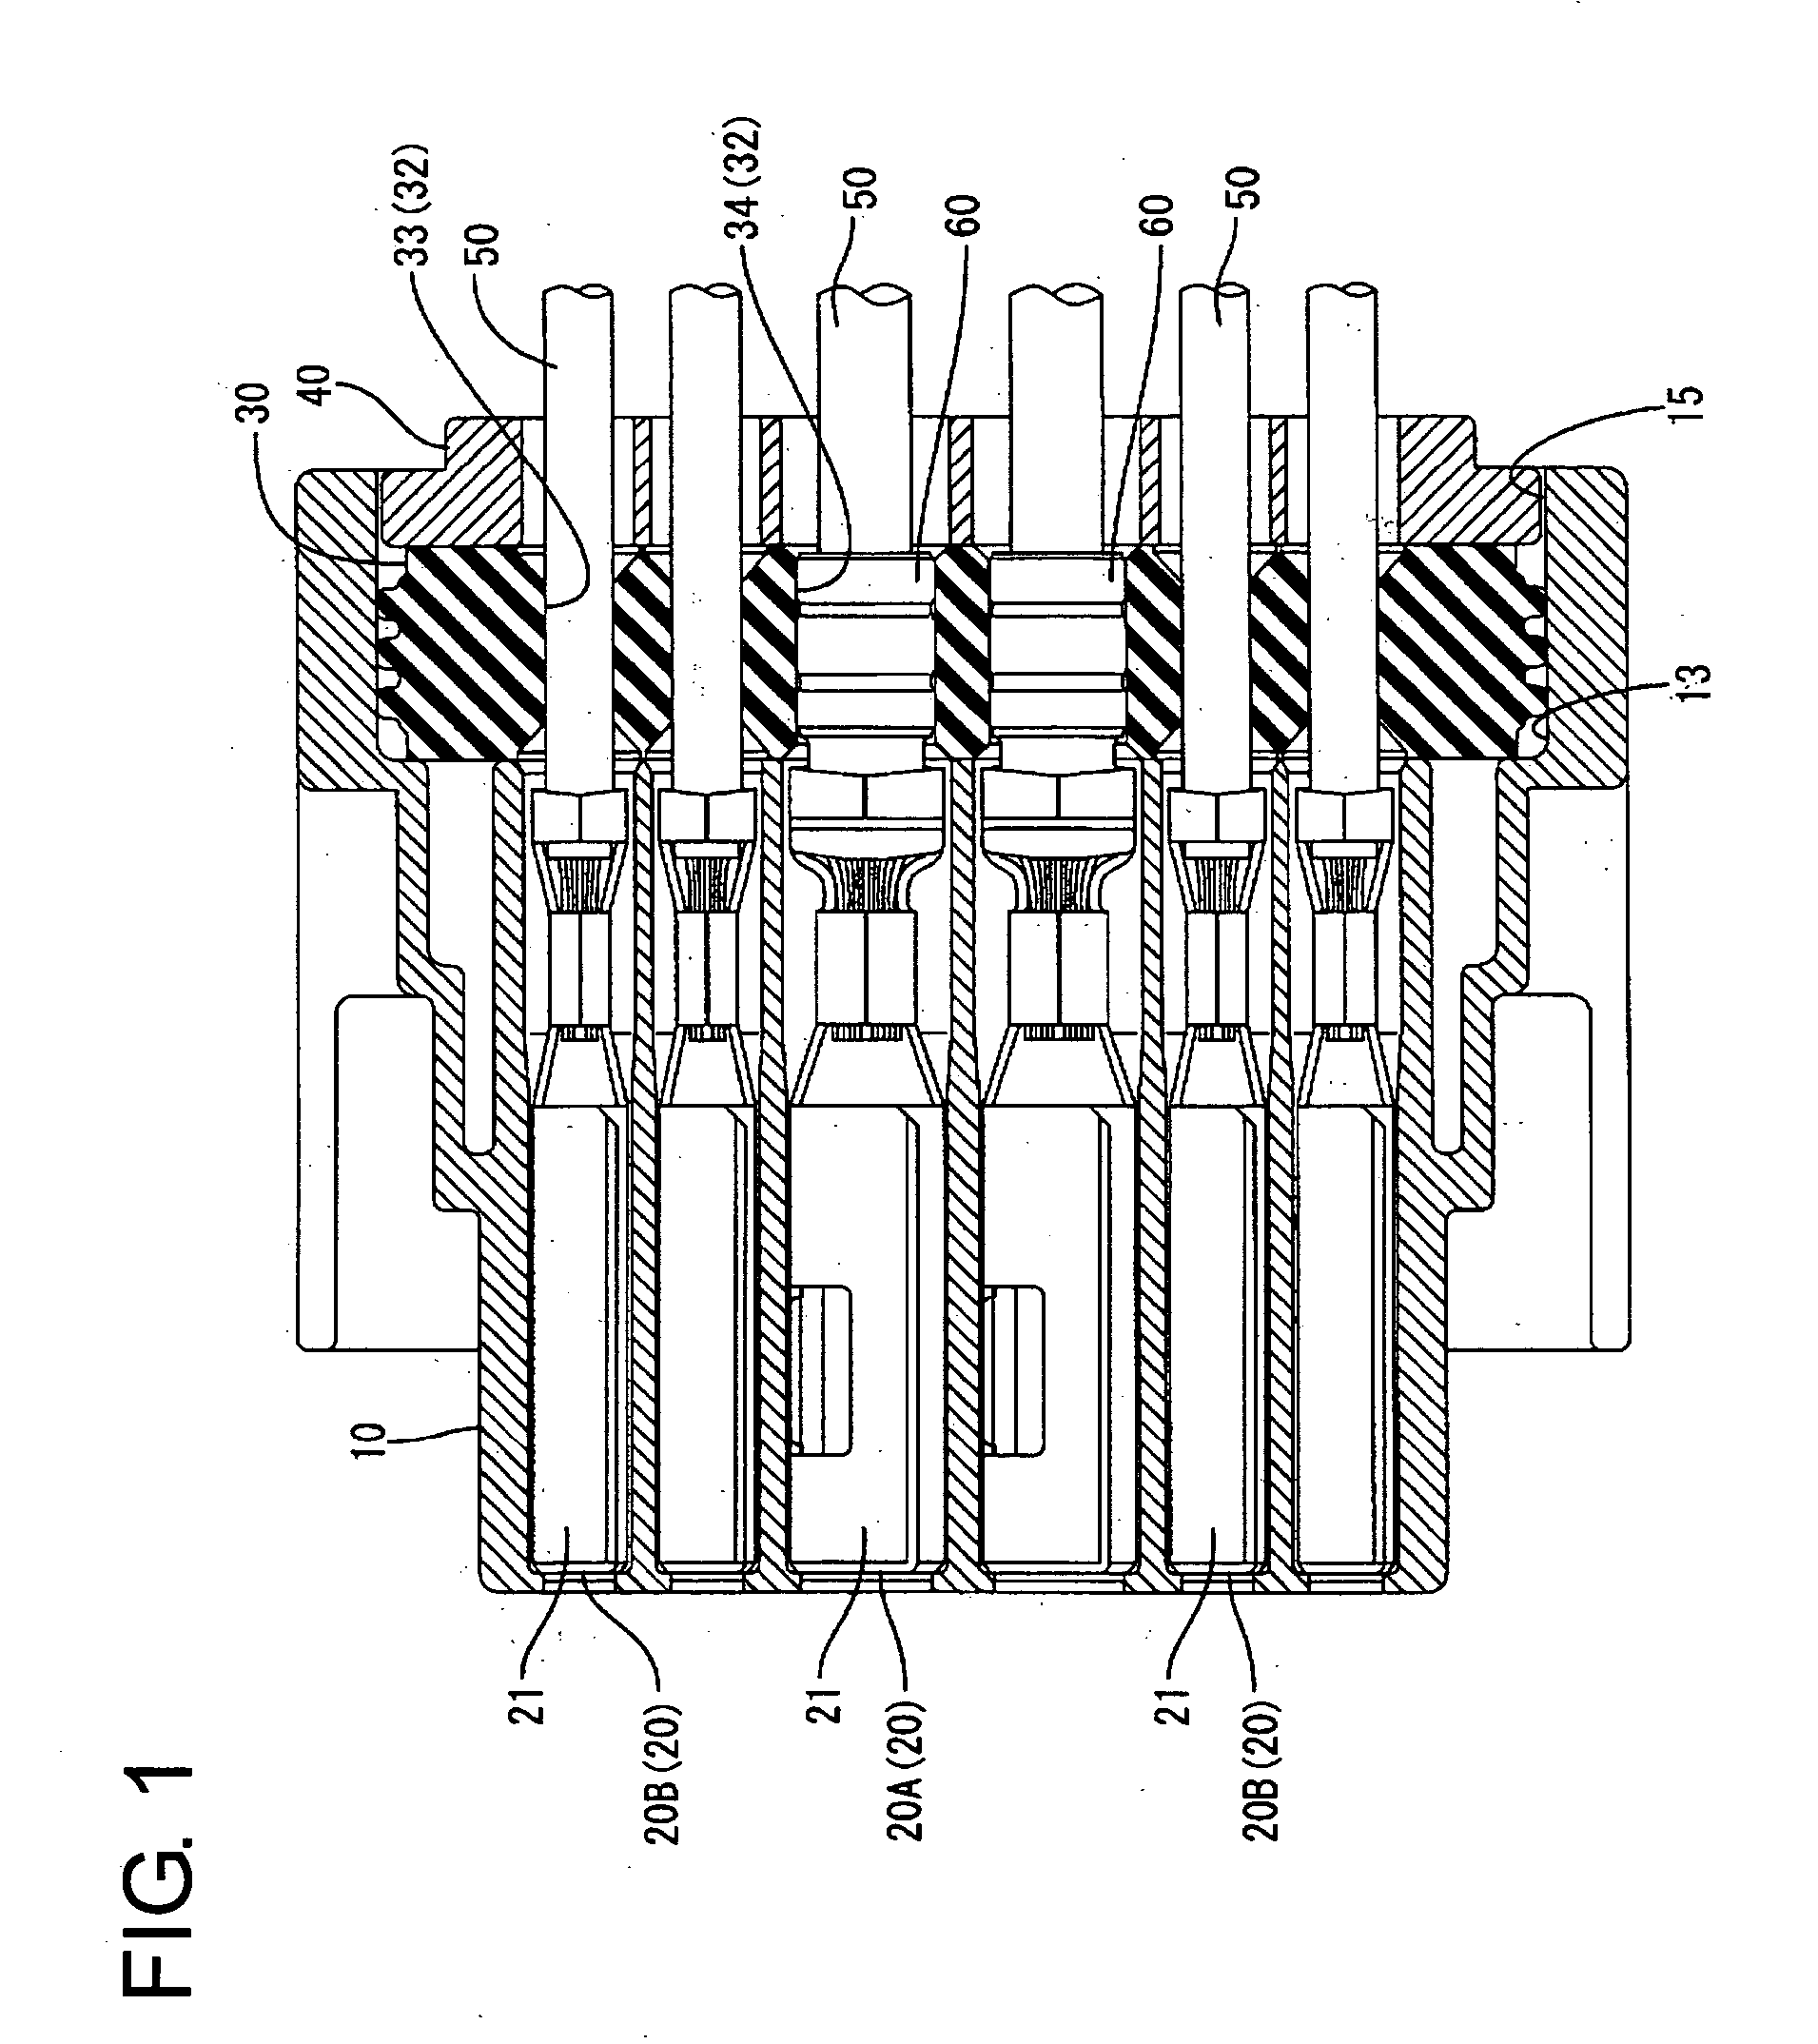 Watertight connector